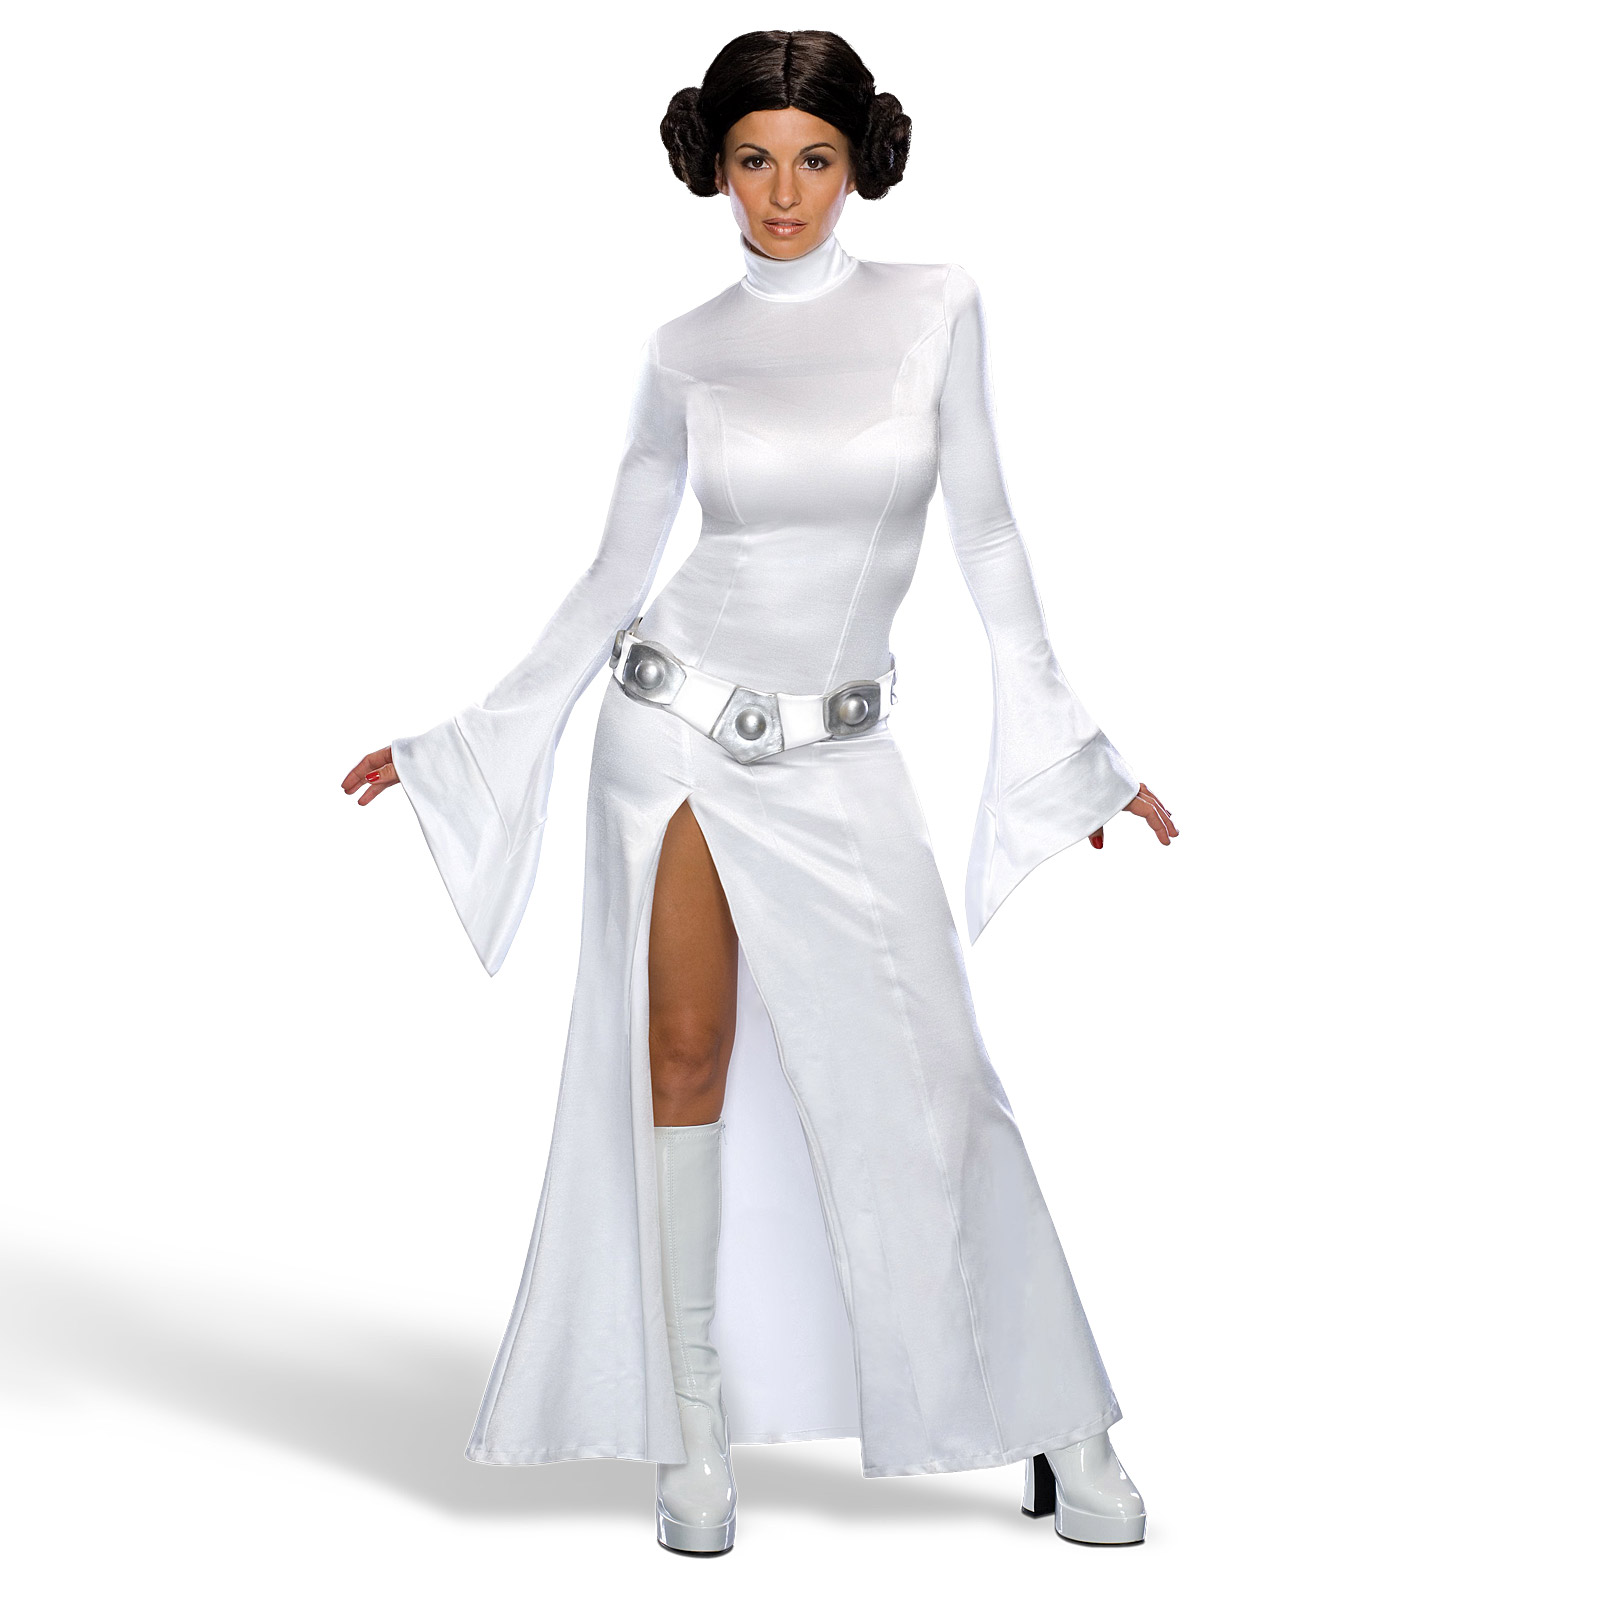 Princess Leia - Star Wars Costume